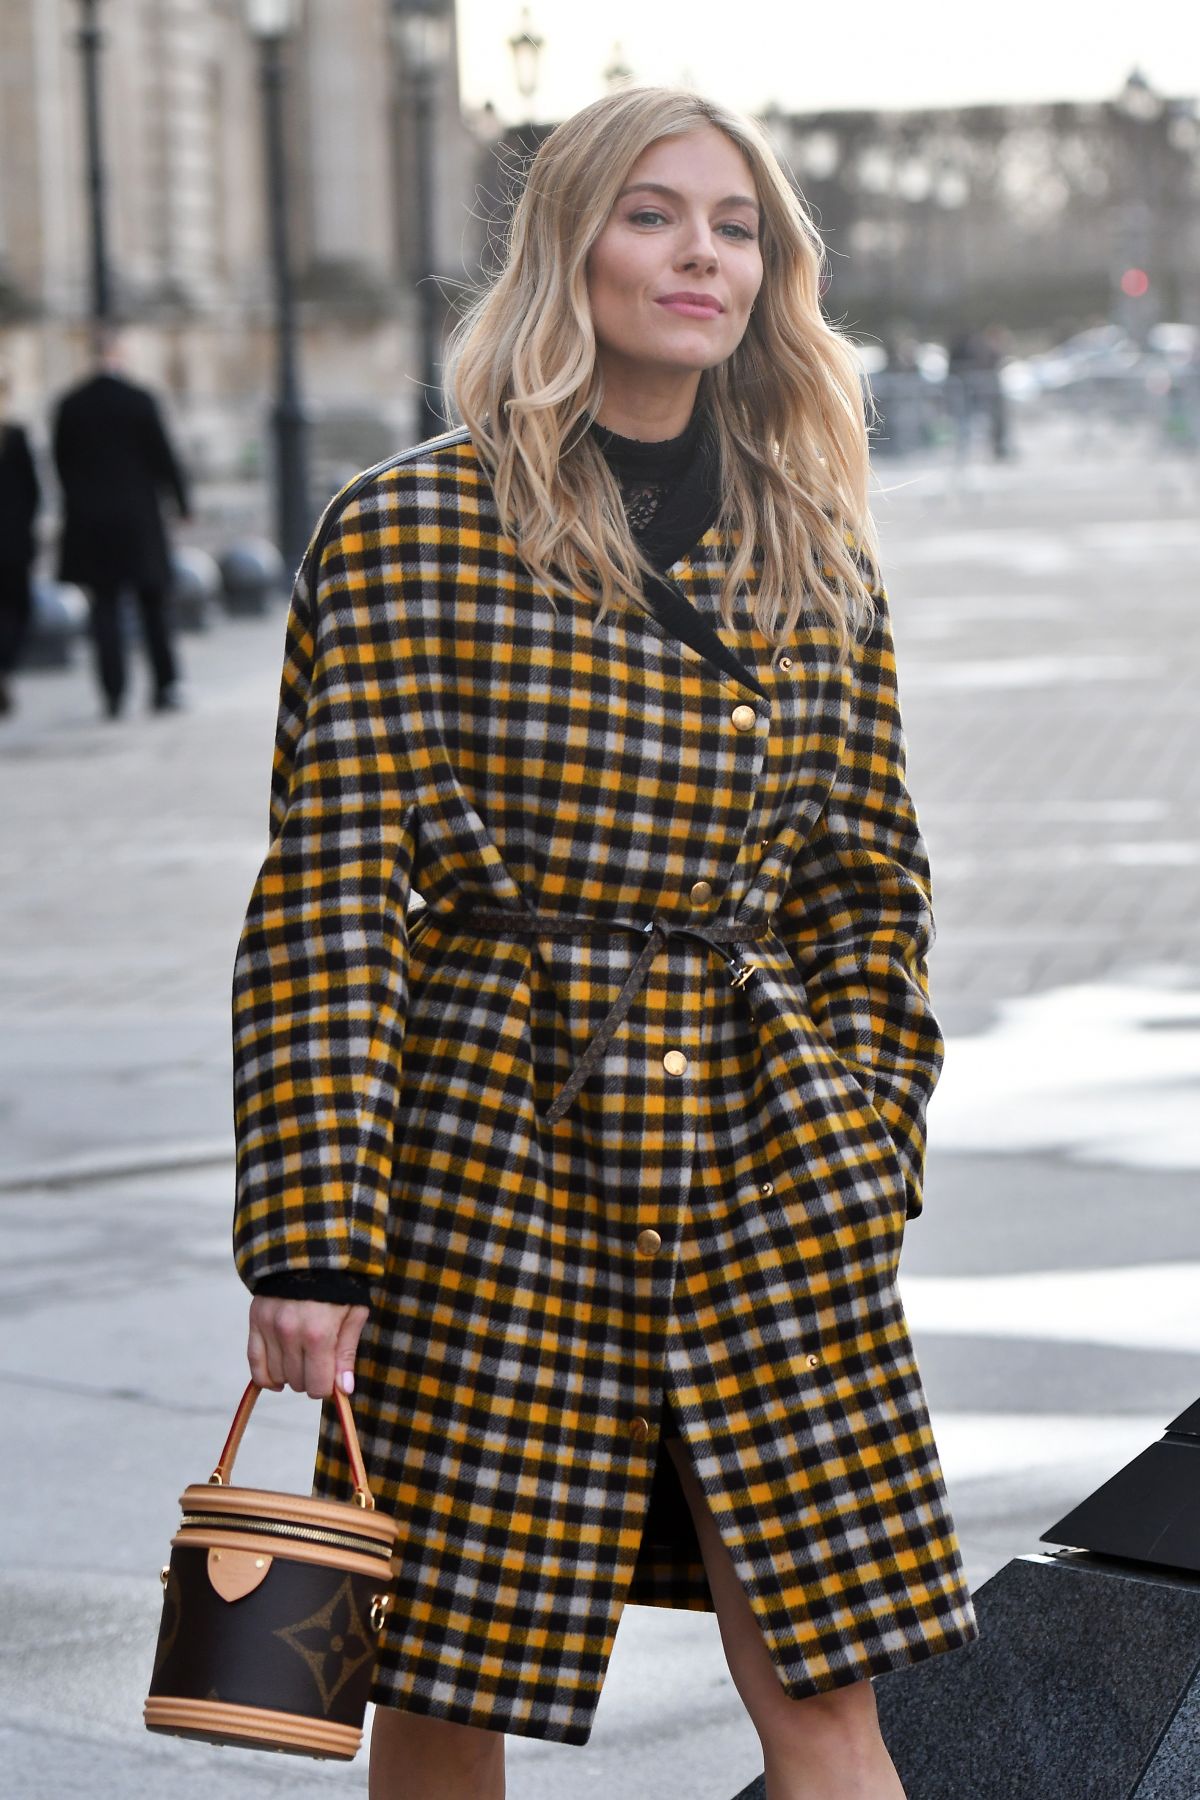 Sienna Miller Louis Vuitton Fall Fashion Show March 05, 2019 – Star Style